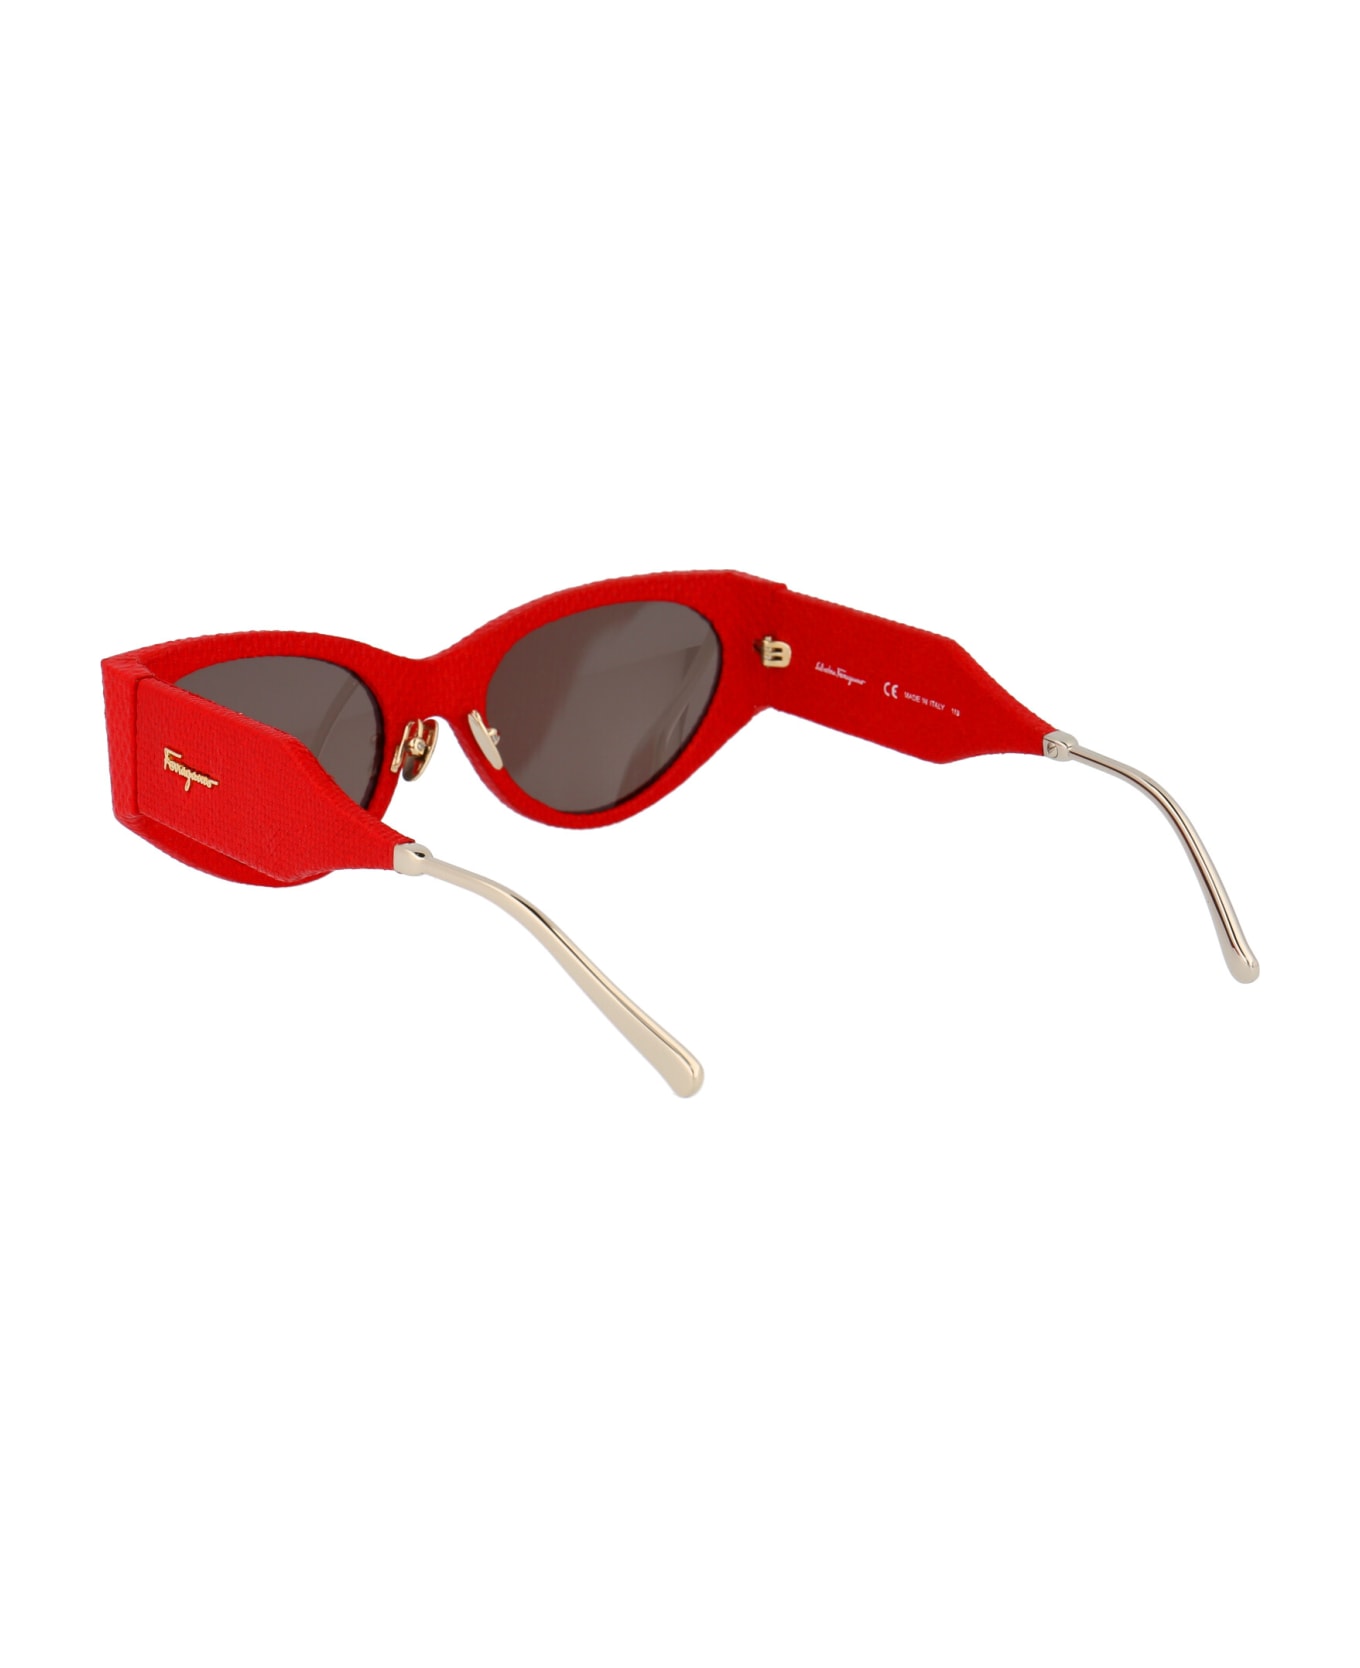 Salvatore Ferragamo Eyewear Sf950sl Sunglasses - 647 RED KARUNG